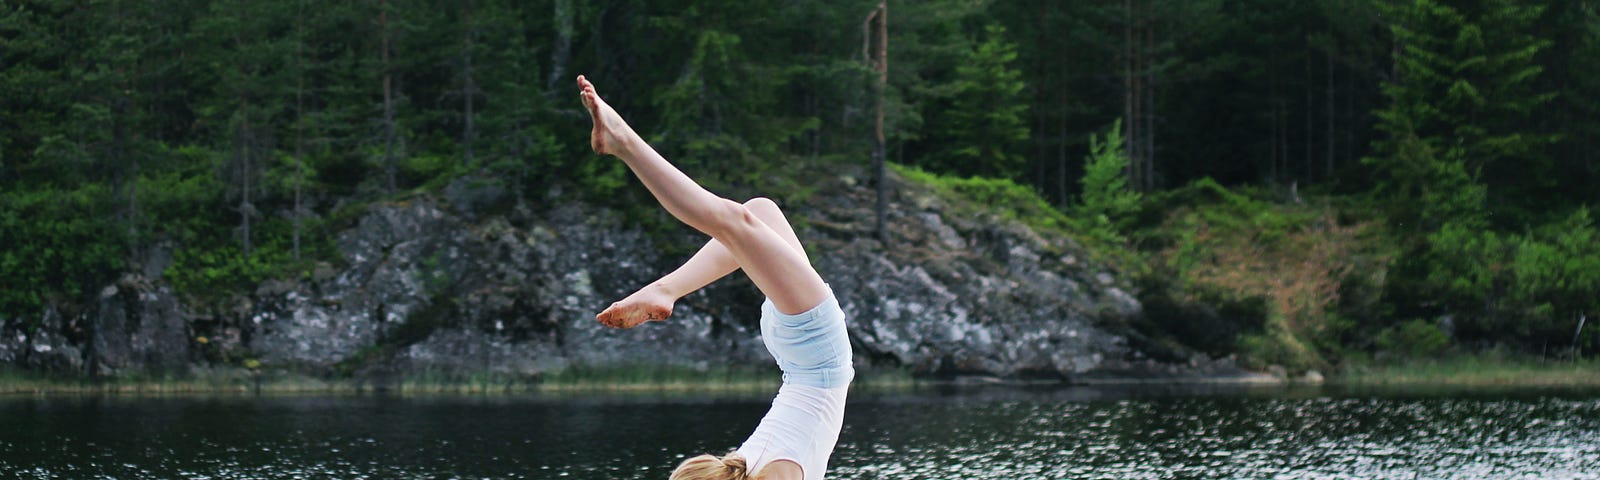 Girl doing handstand in boat